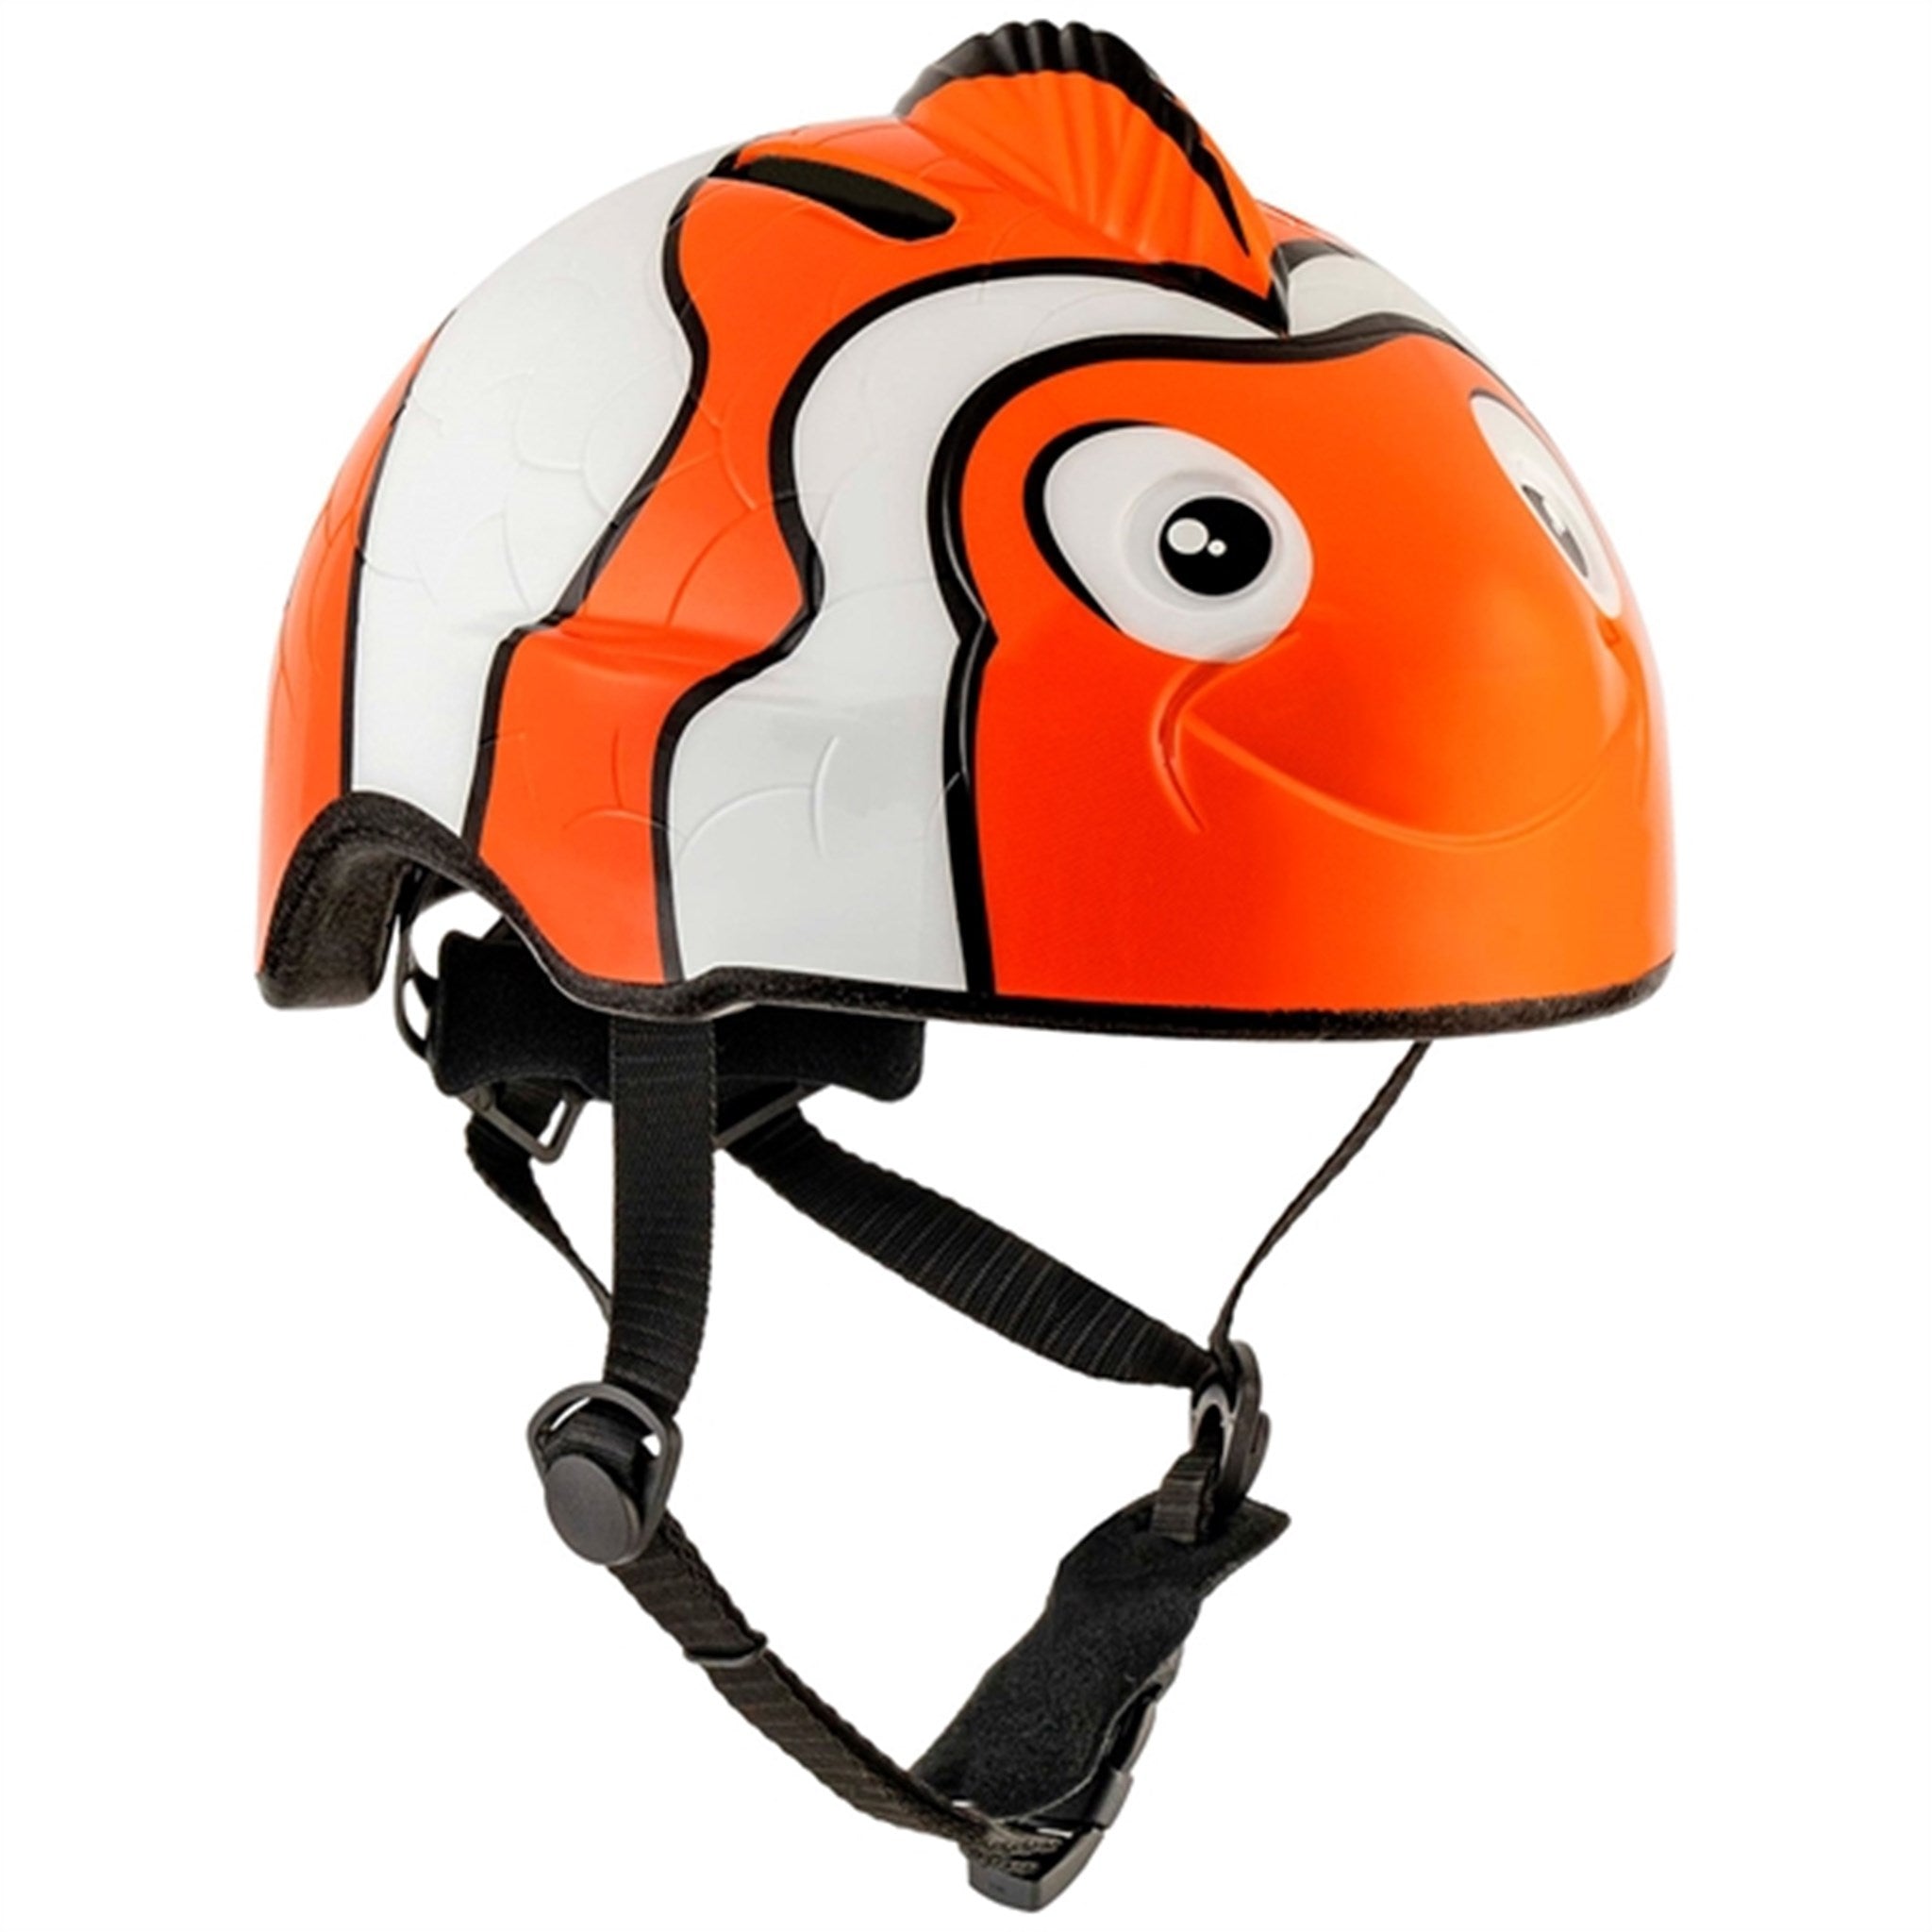 Crazy Safety Fish Bicycle Helmet Orange